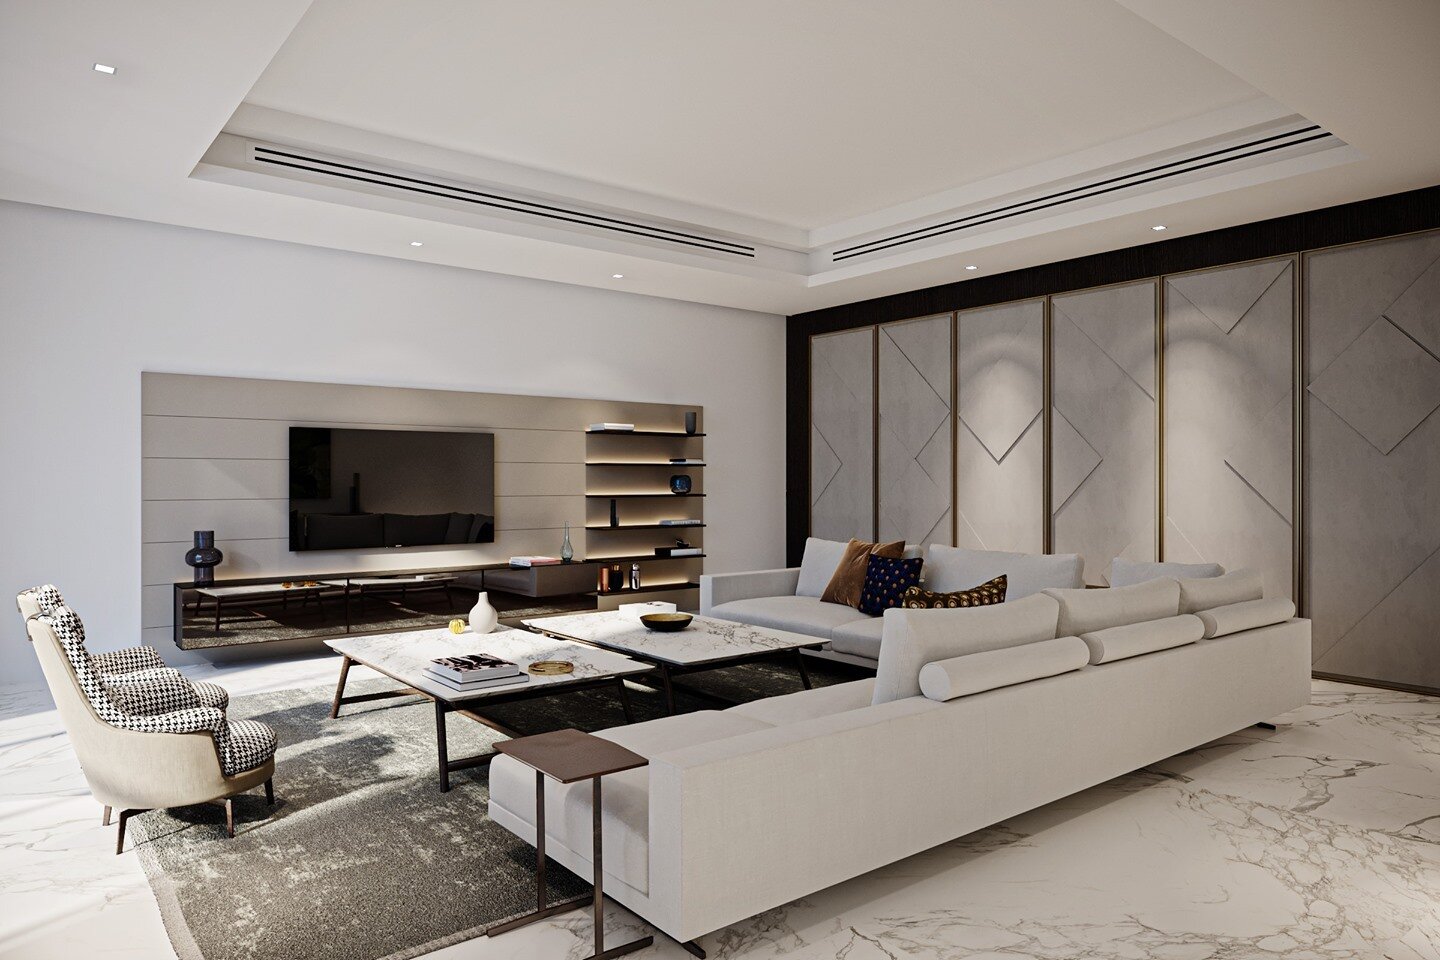 ⁠
Saddyiat Villa ⁠ - Family Room ⁠
⁠
Designers: VSHD ⁠
3D: @hassanjaberdesigns⁠
RENDERING INFO: 8 Perspectives 3000 pixels ⁠
PROGRAMS USED: 3d Max 2016, Corona, Photoshop. ⁠
⁠
⁠
⁠
➖➖➖➖➖➖➖➖➖➖➖➖➖⁠
 WWW.HASSANJABER.COM⁠
➖➖➖➖➖➖➖➖➖➖➖➖➖⁠
⁠
🔺Follow @hassan